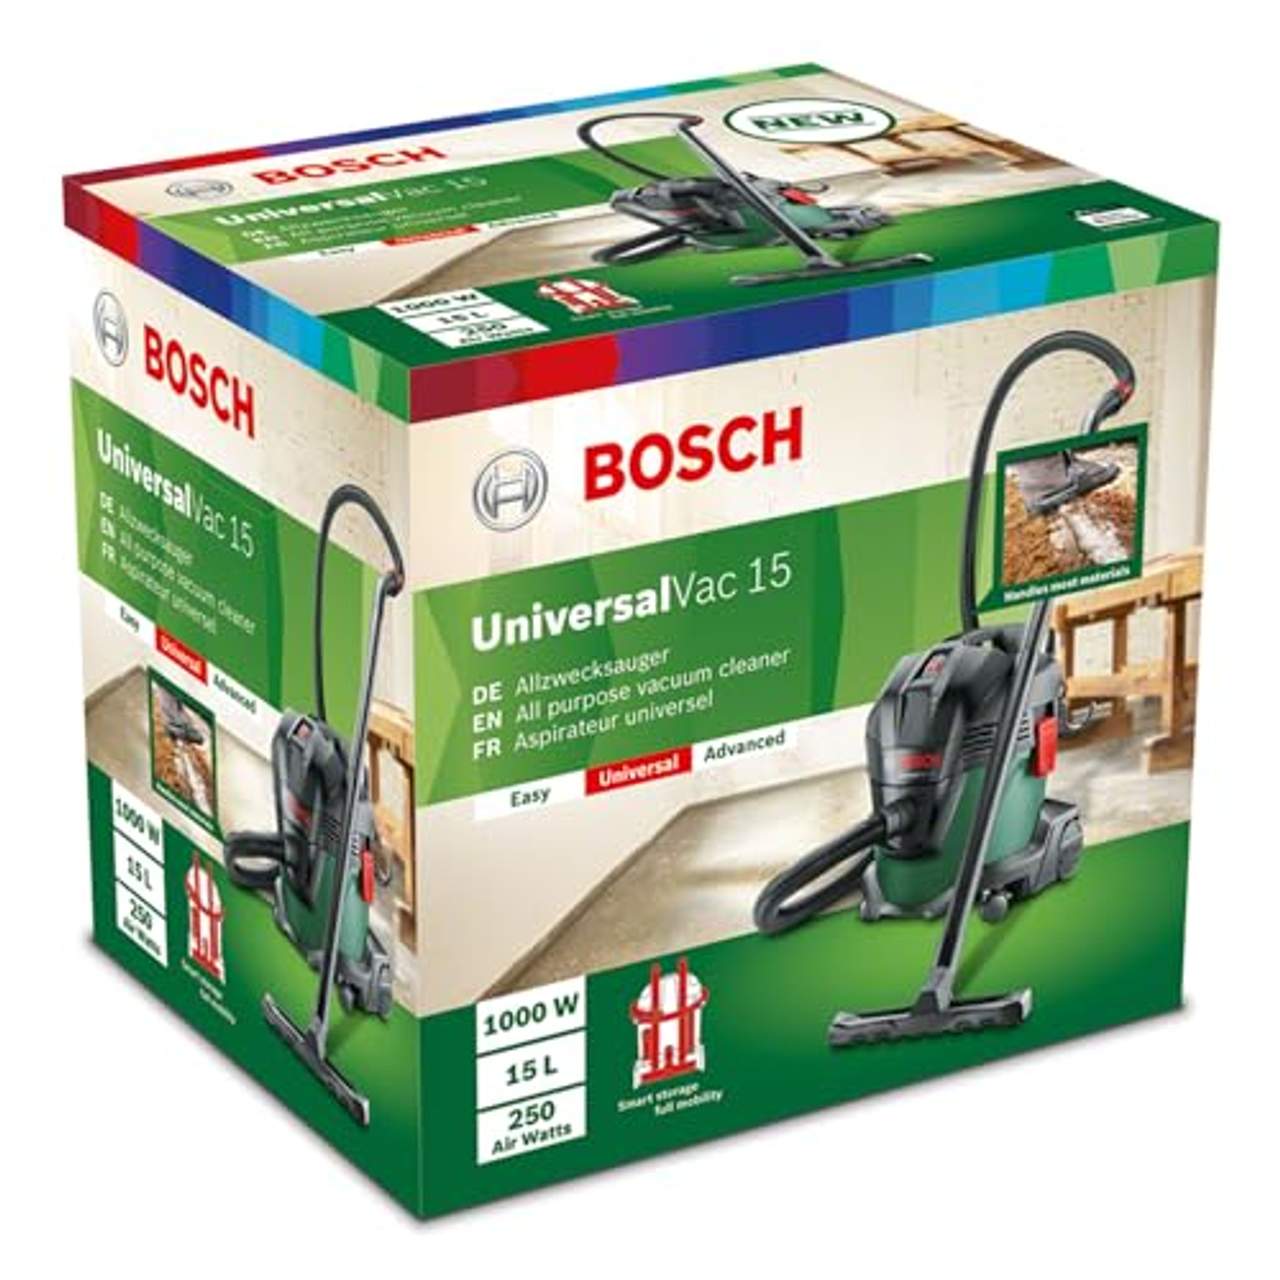 Bosch Nass- und Trockensauger UniversalVac 15